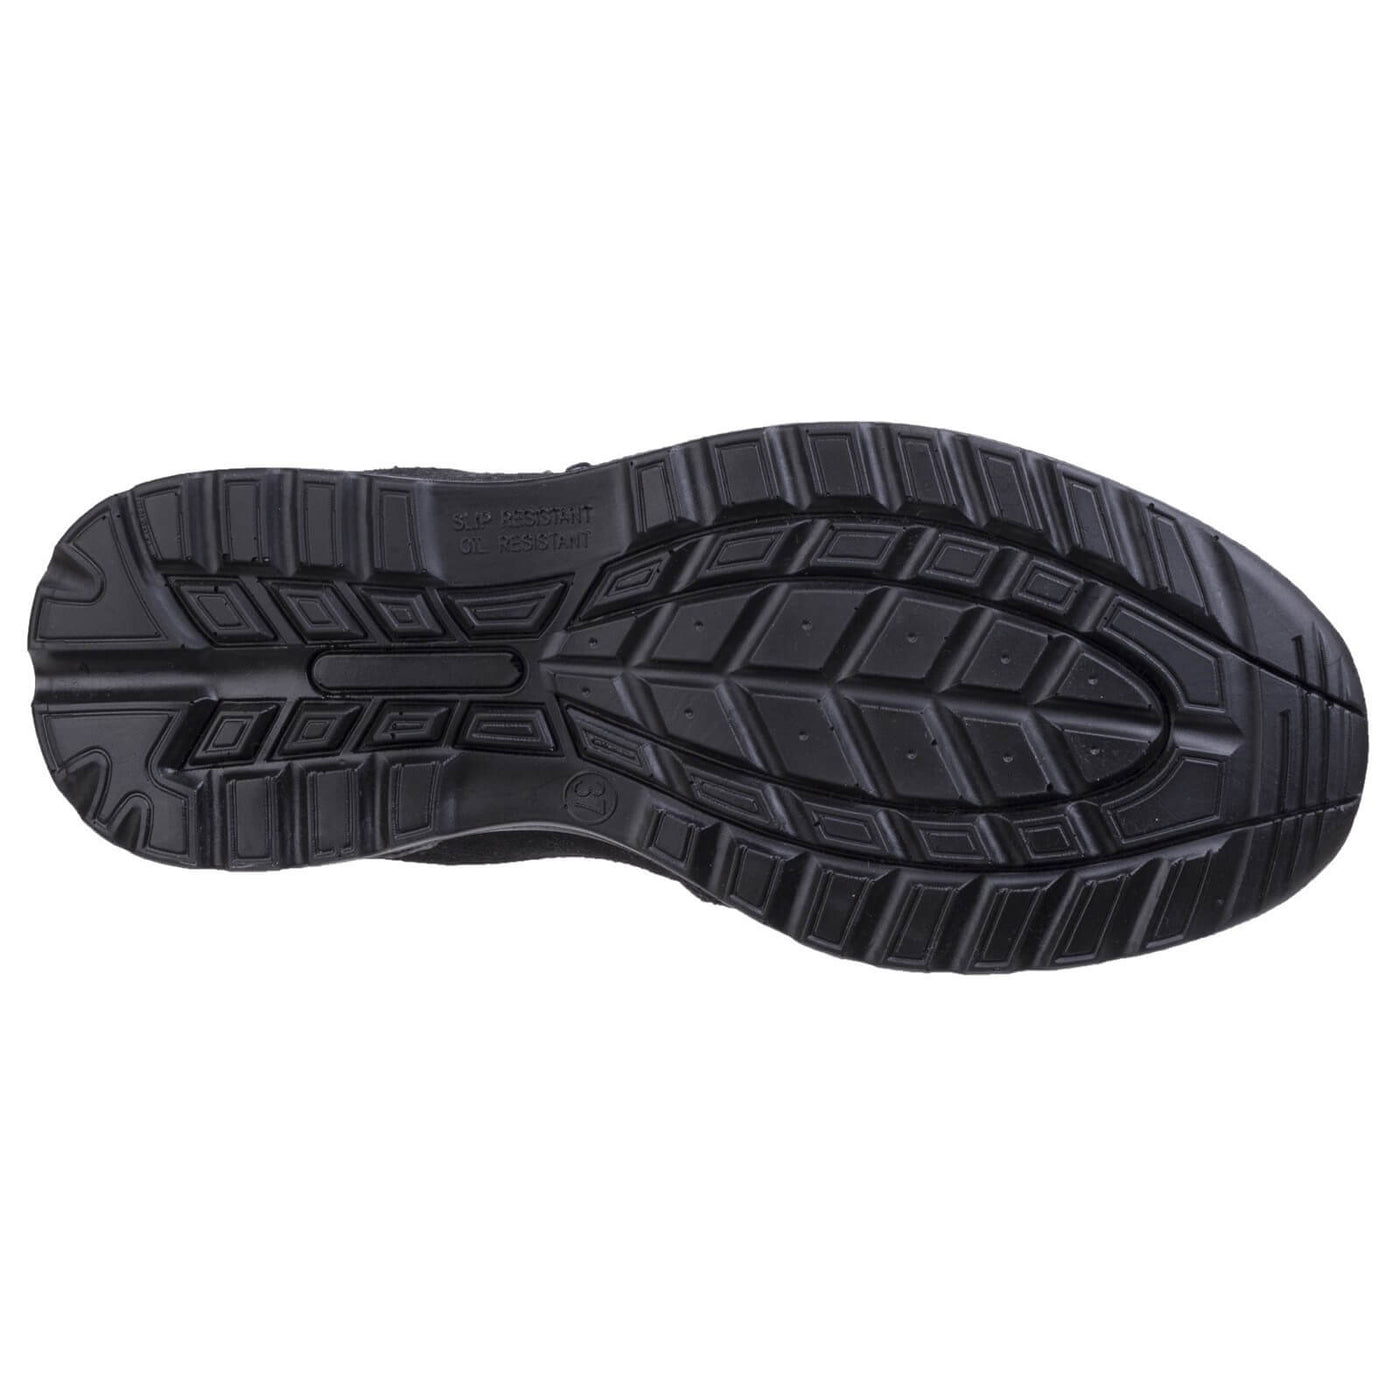 Amblers AS603C Metal Free Ladies Slip on Safety Shoes Black 3#colour_black